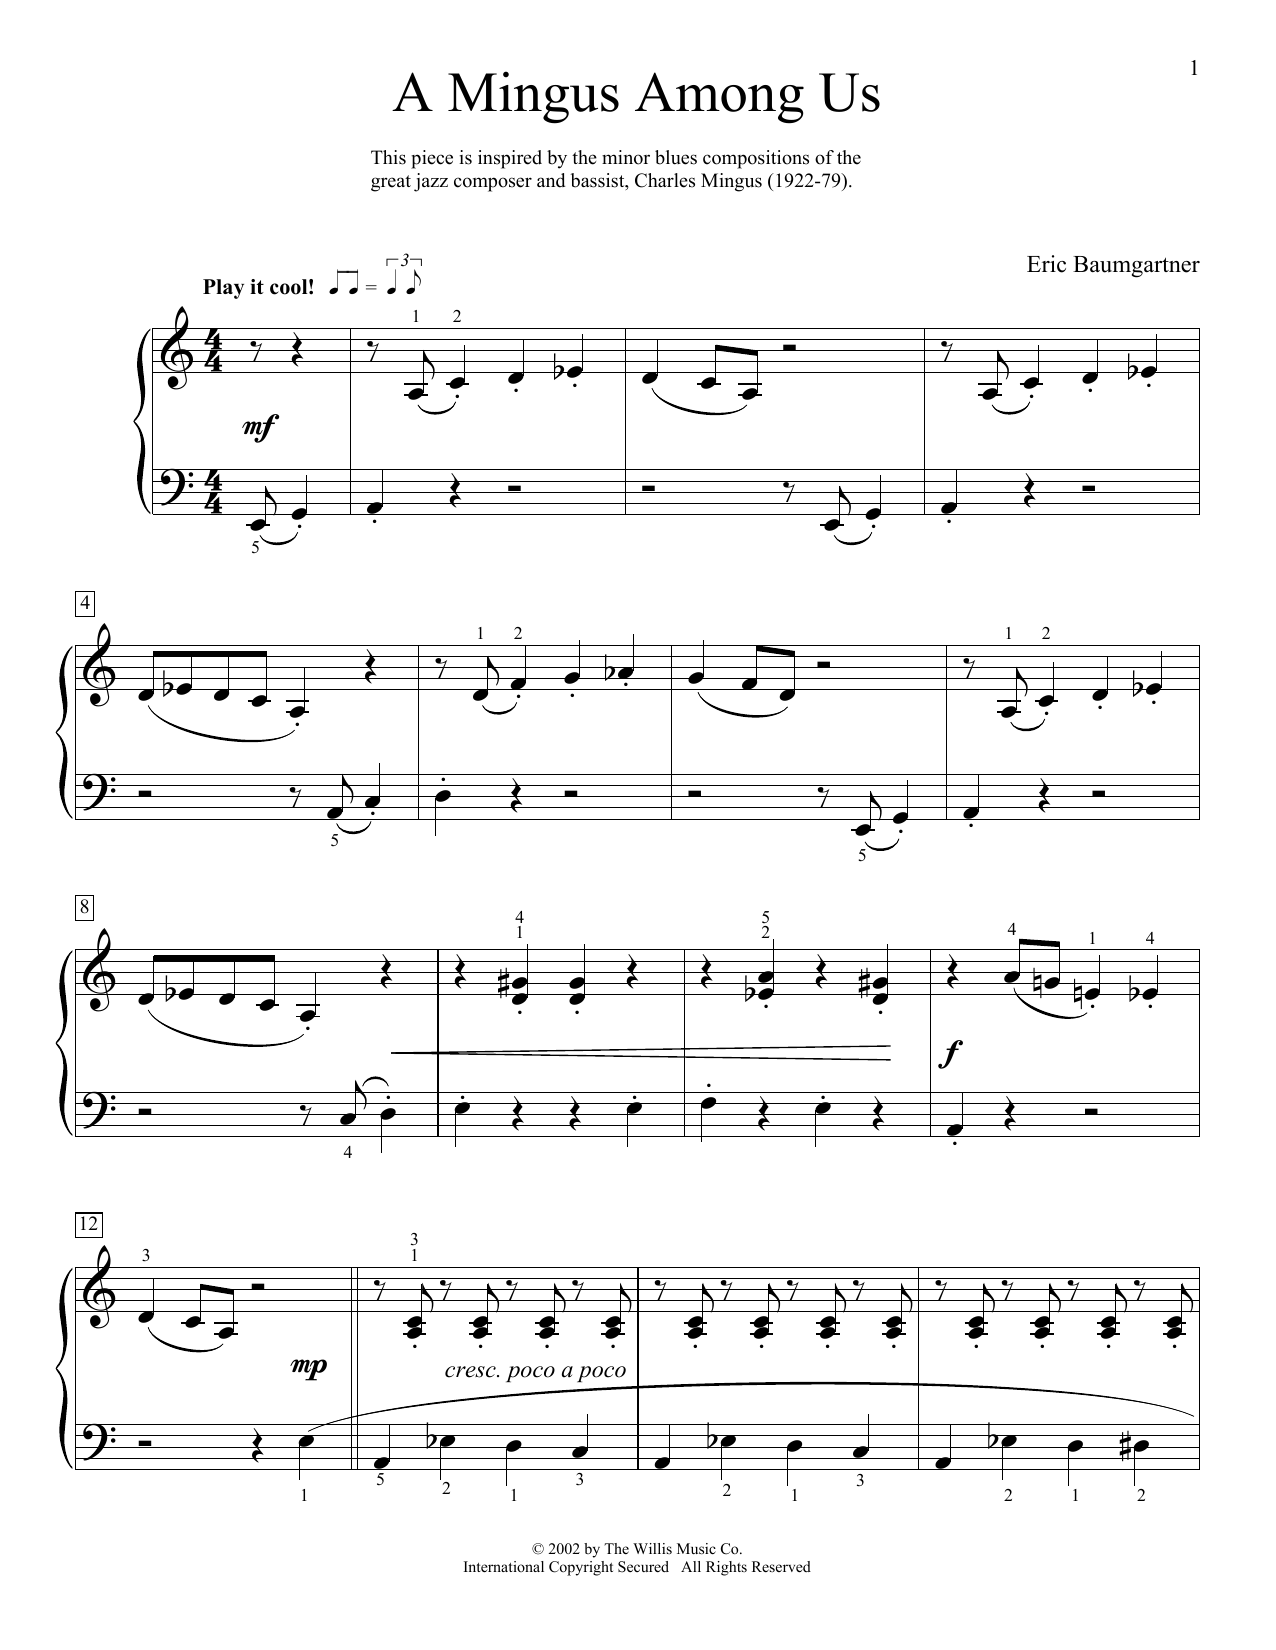 Eric Baumgartner A Mingus Among Us sheet music notes printable PDF score